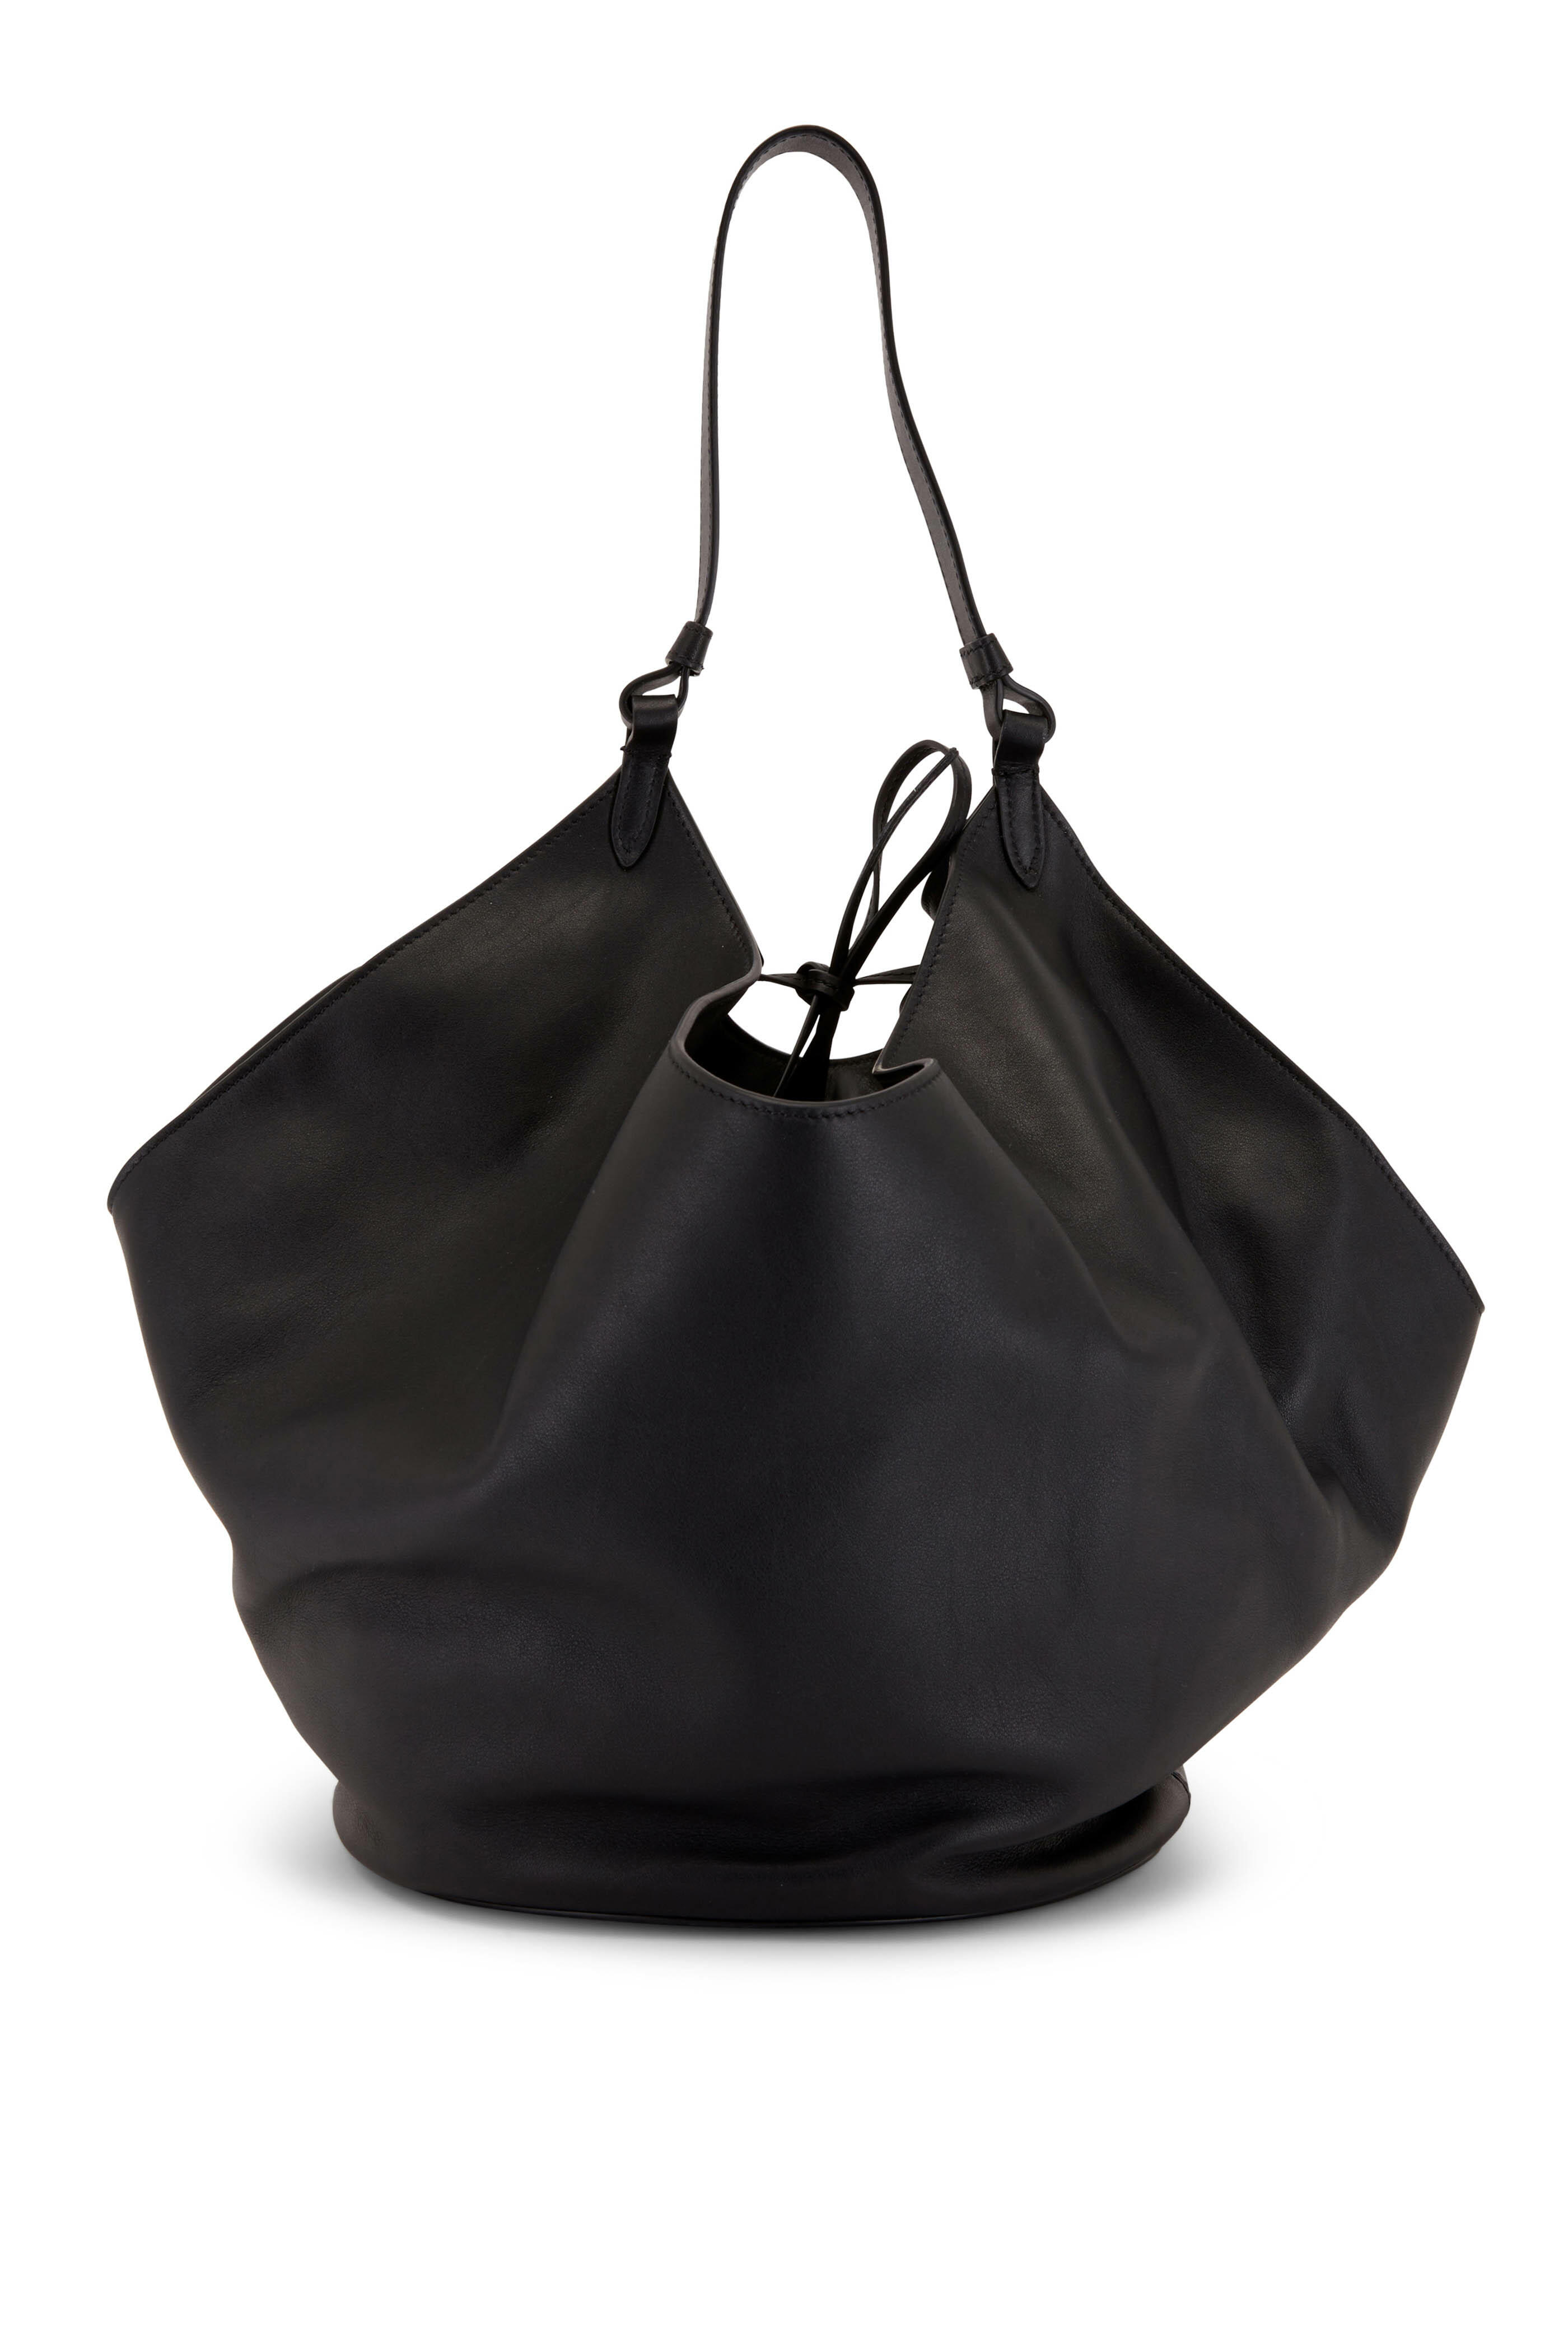 Joni Shoulder Bag in Veg Tanned Leather - Black – HOBO